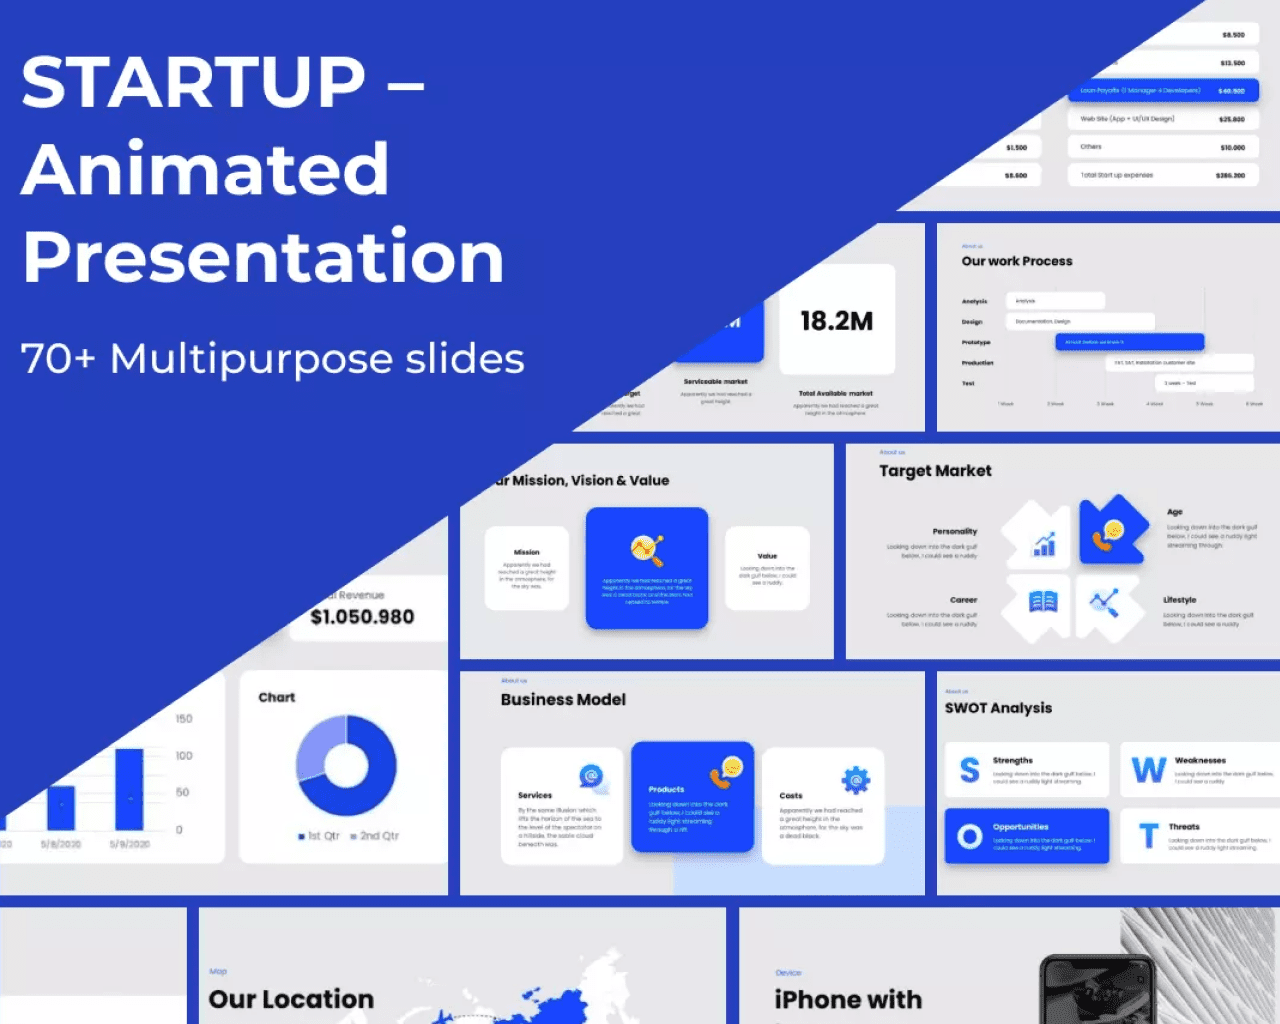 STARTUP – Animated Presentation